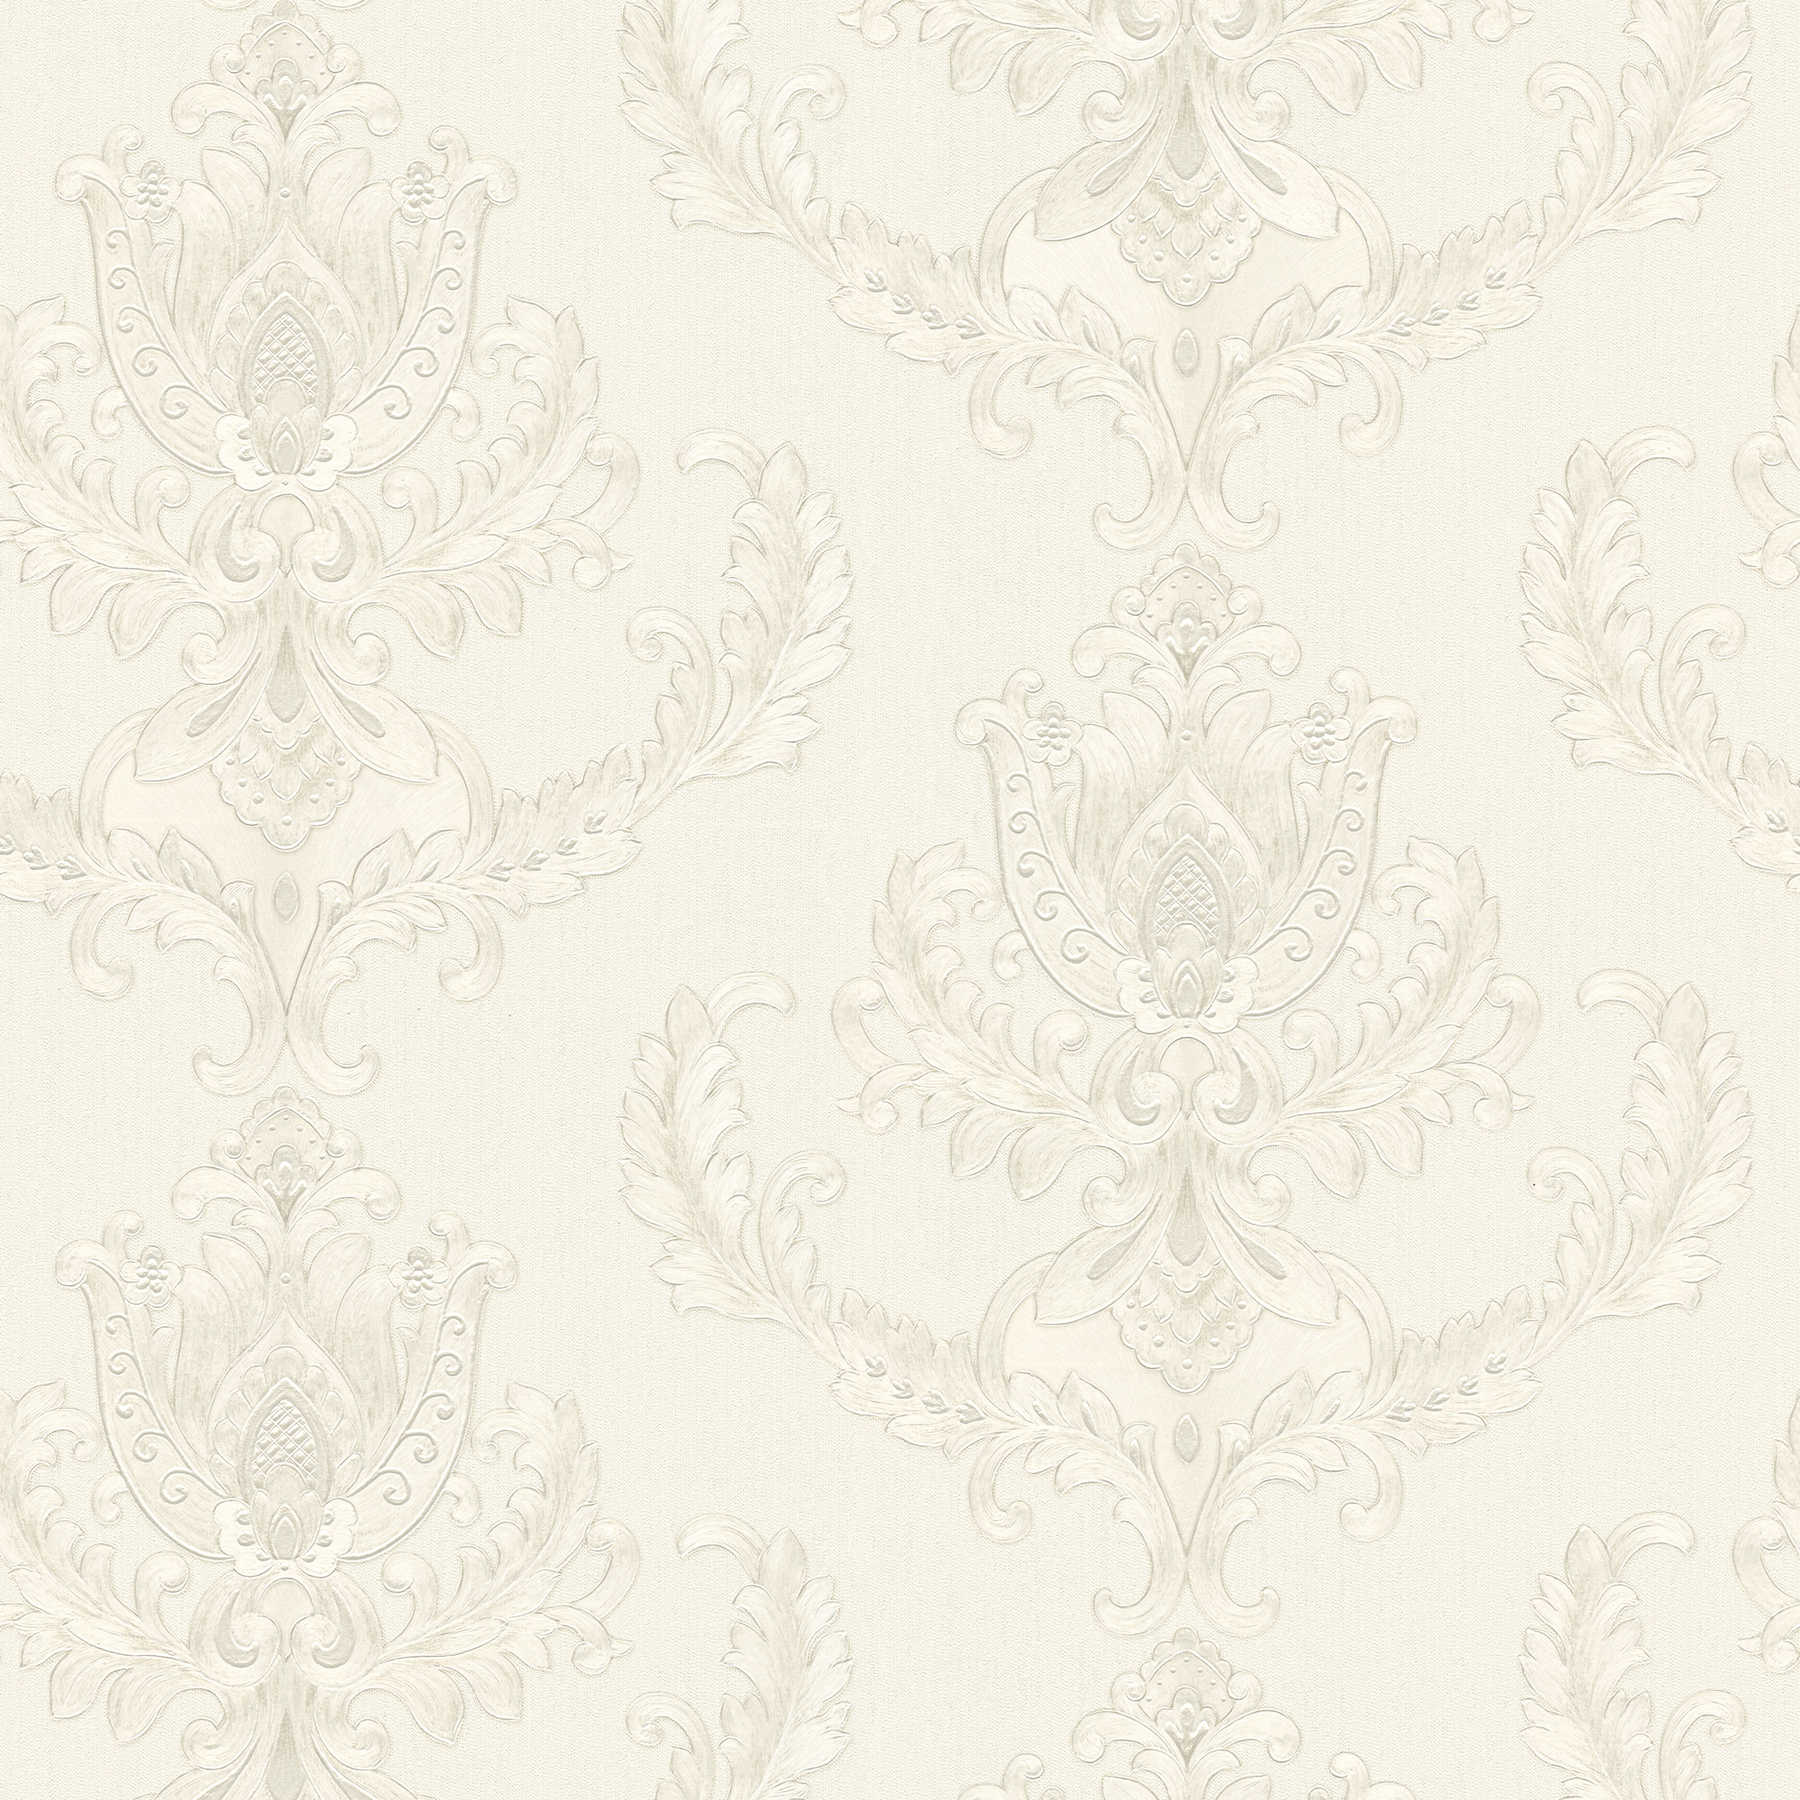 Ornamental wallpaper with floral decor & metallic accent - cream
